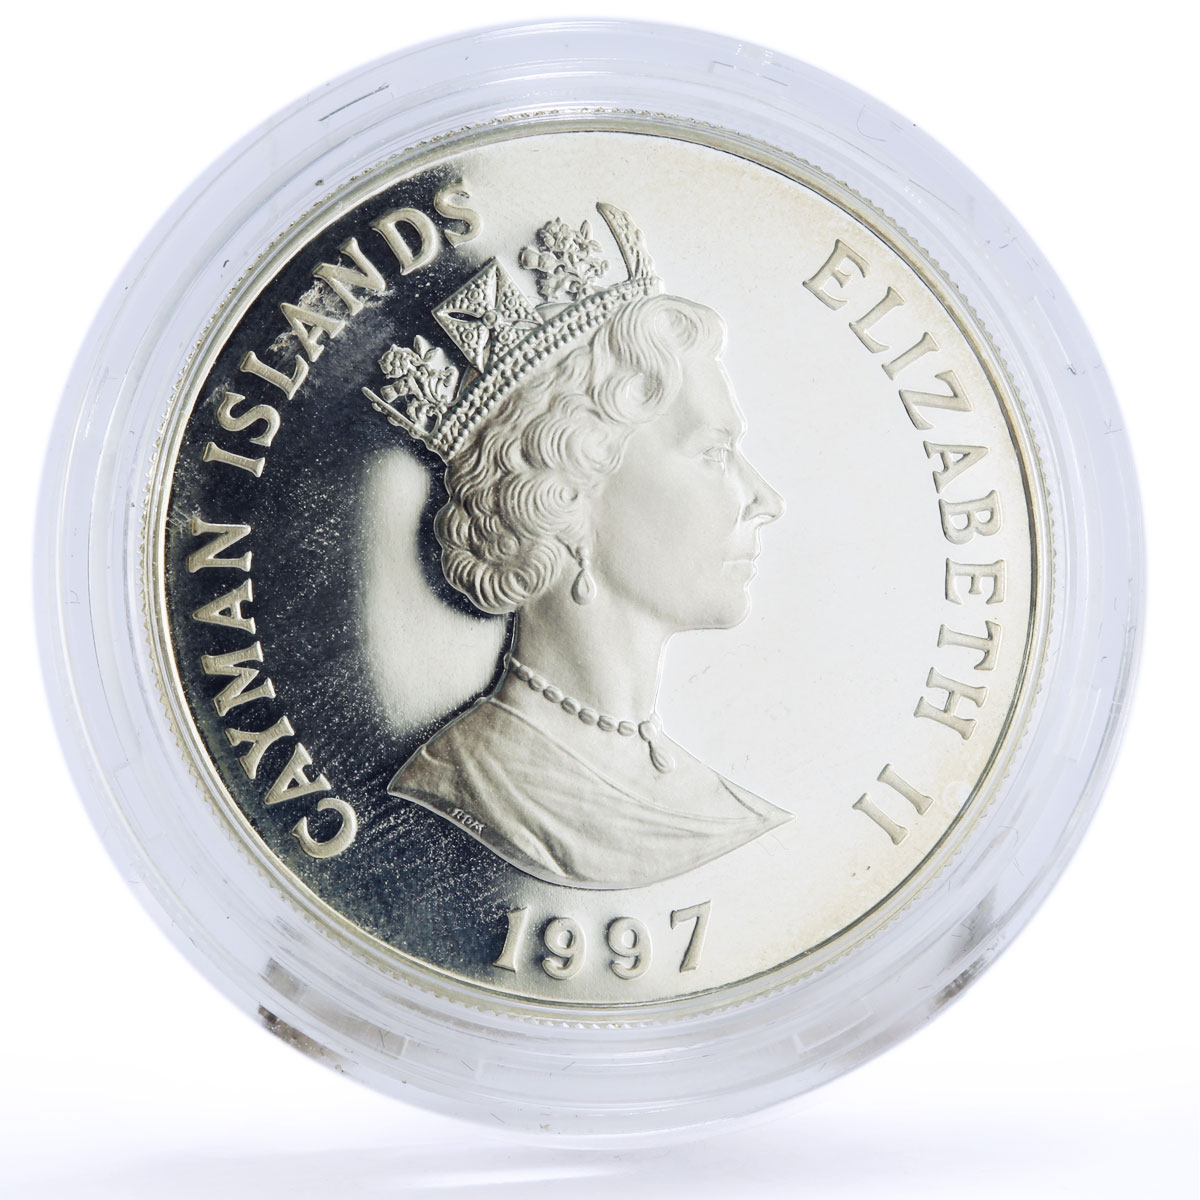 Cayman Islands 2 $ Seafaring Ship Clipper Monetary Authority silver coin 1997